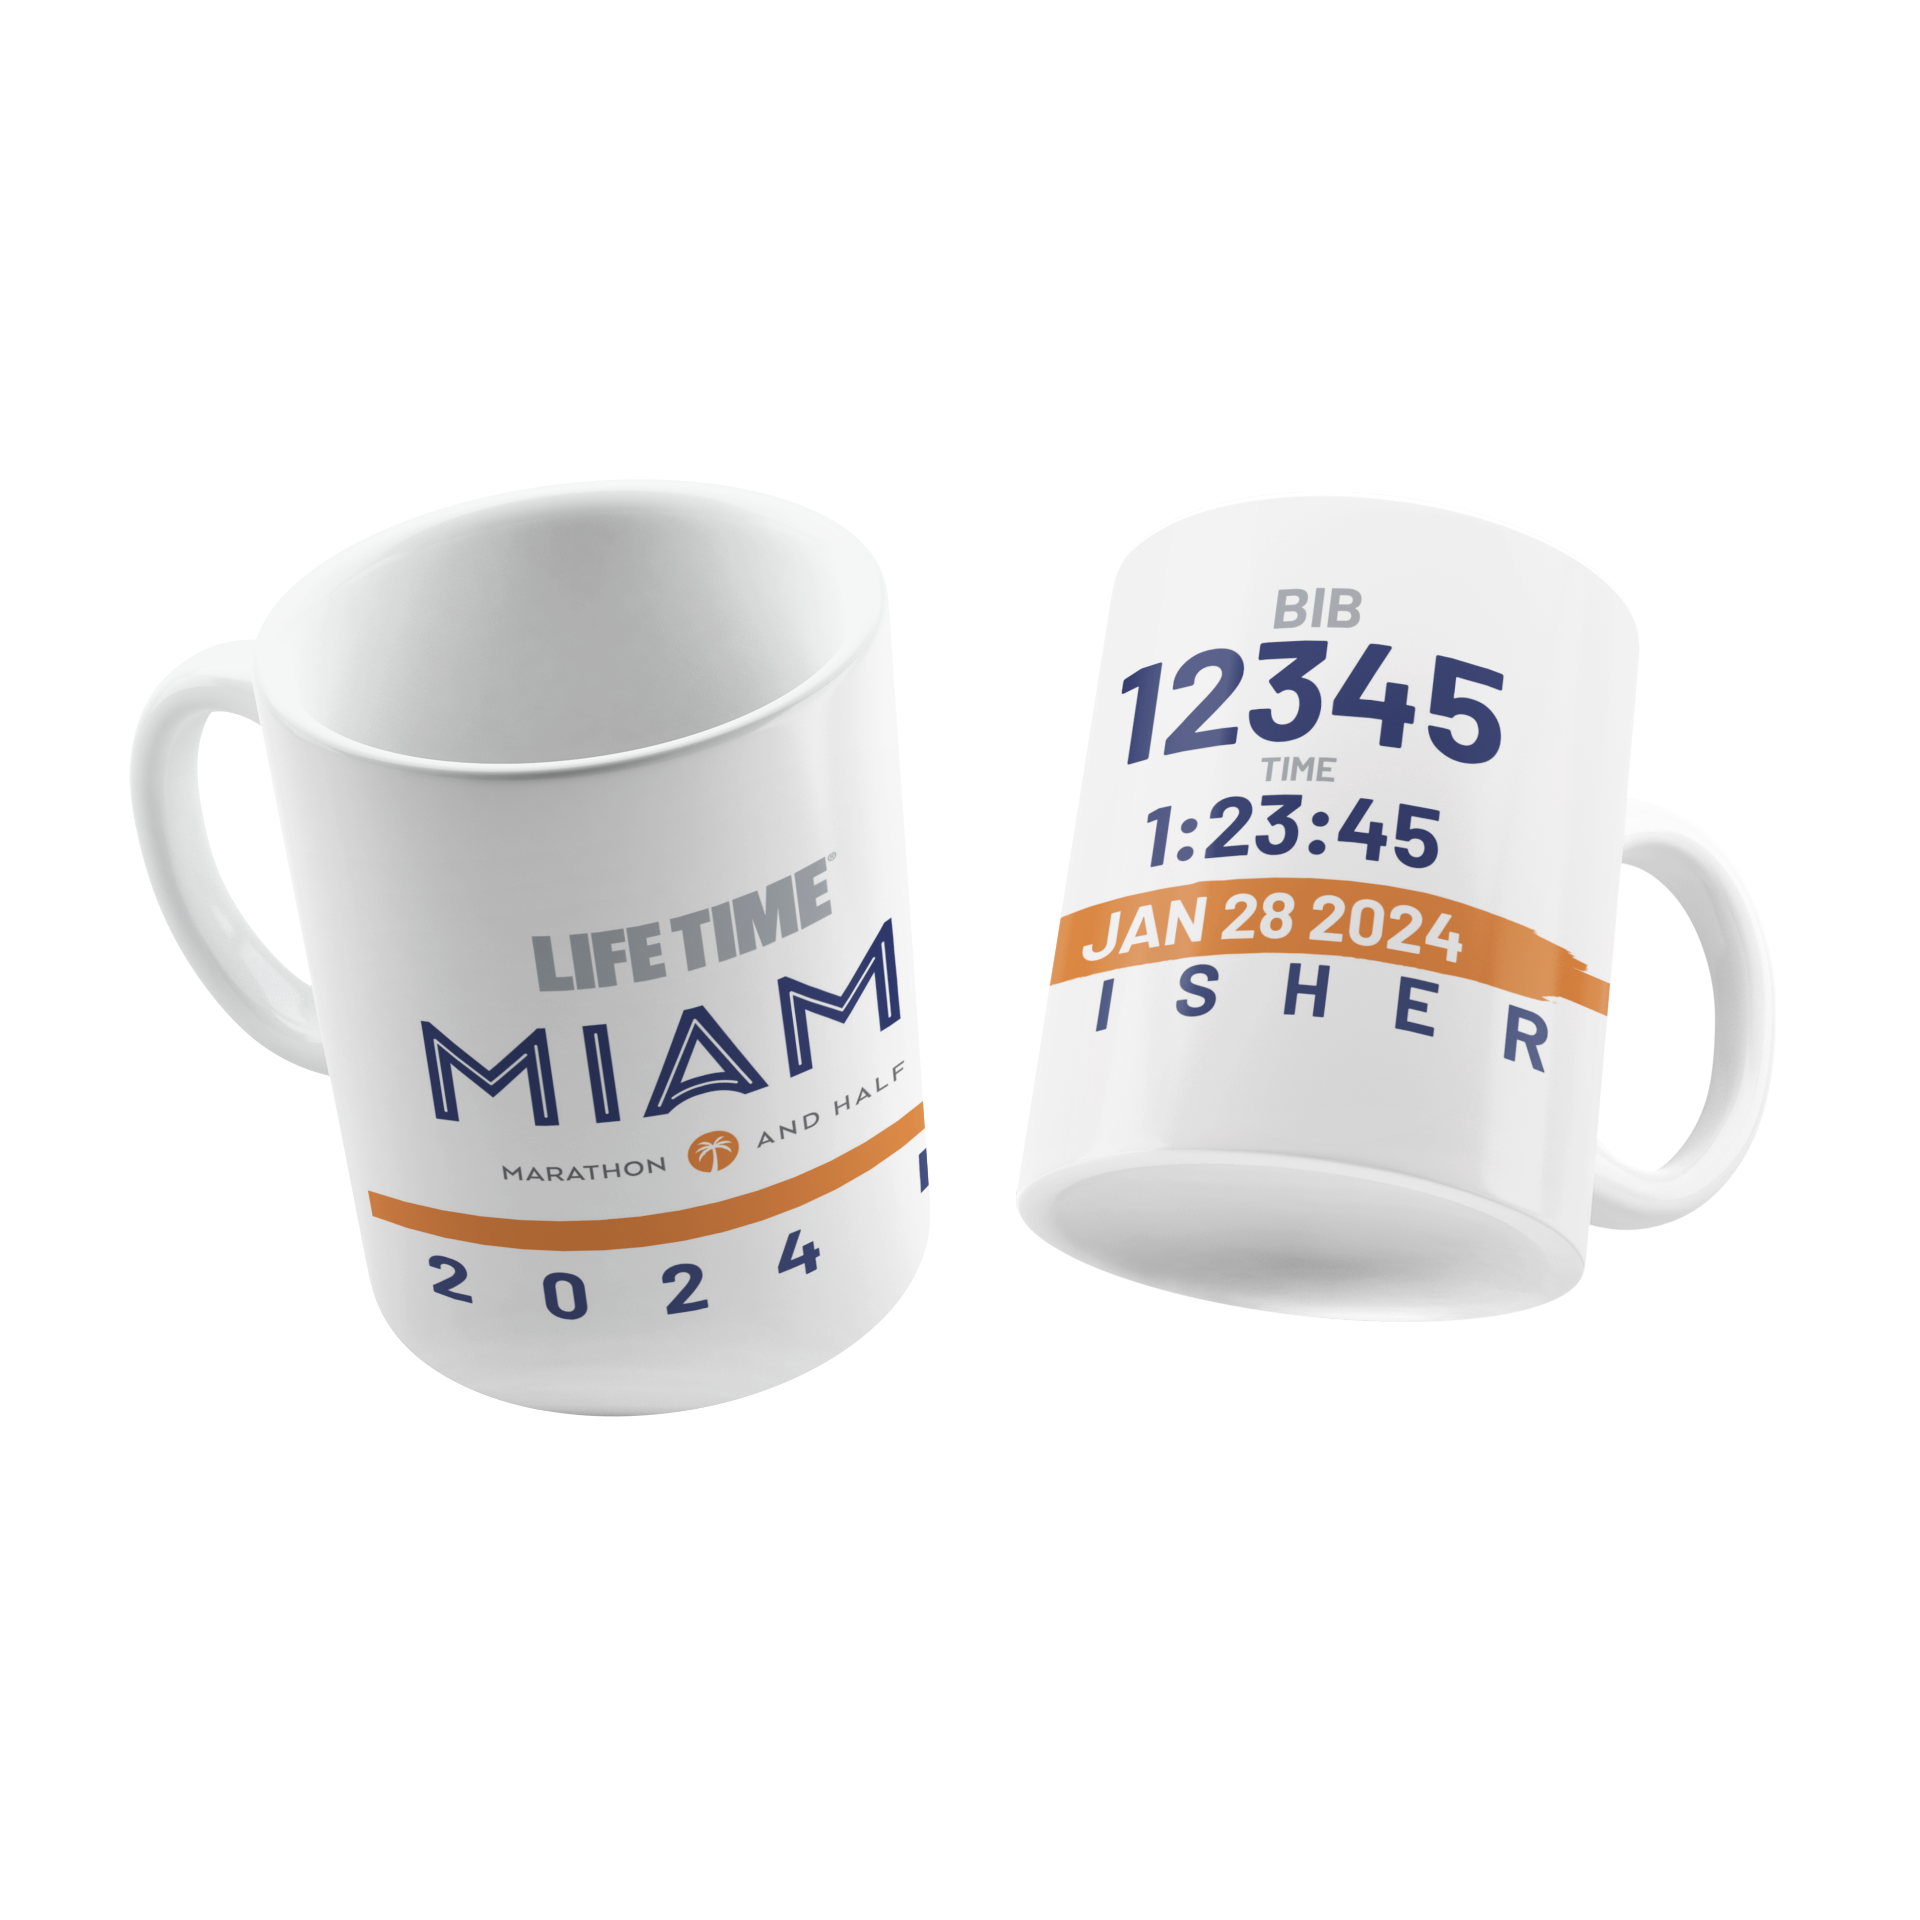 Miami Marathon '24 11 oz Finisher Mug - Custom with your time